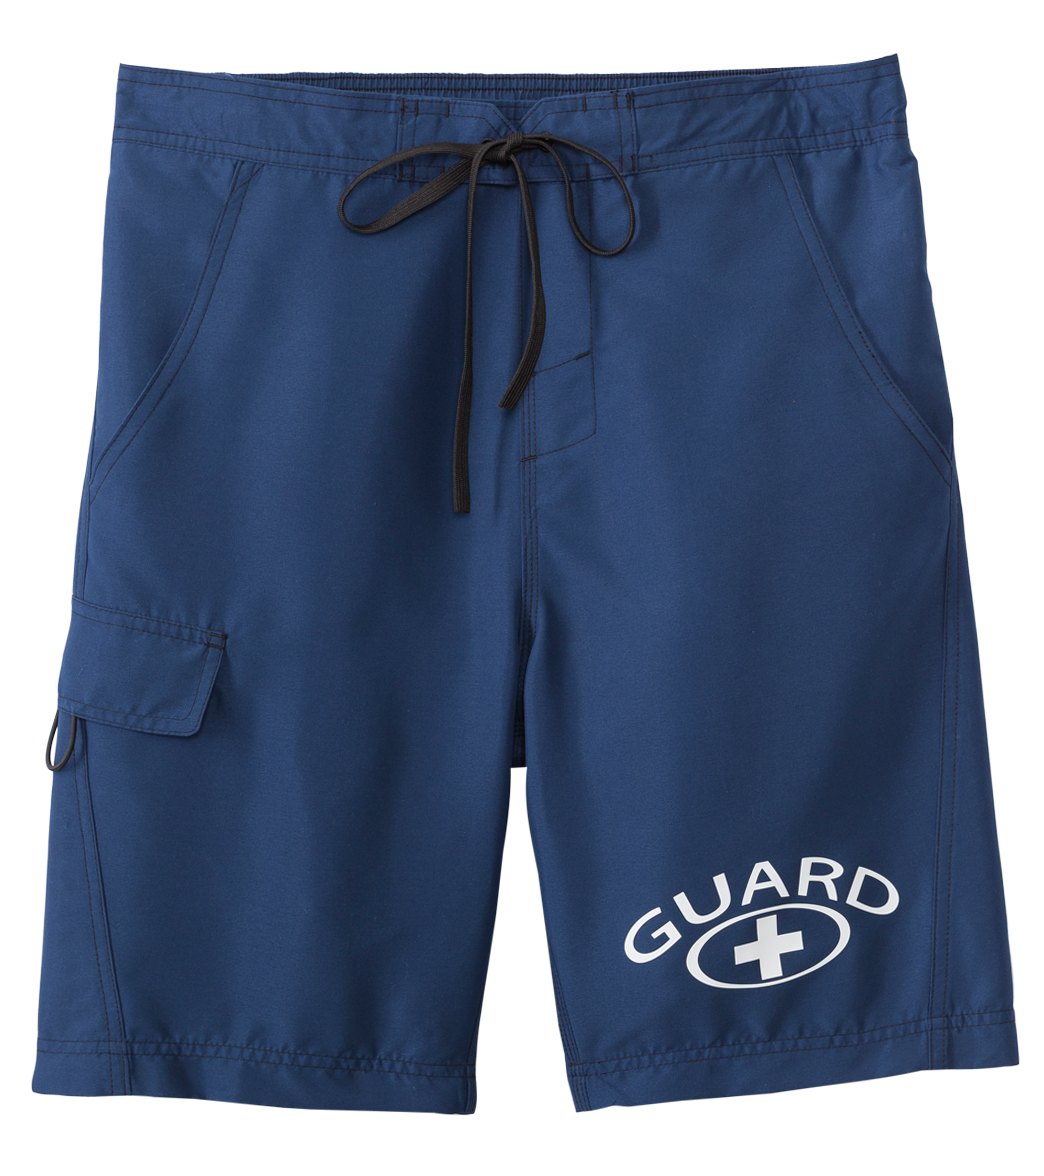 Waterpro Men's Guard Cargo Trunk Swimsuit Shorts - Navy Large Polyester - Swimoutlet.com